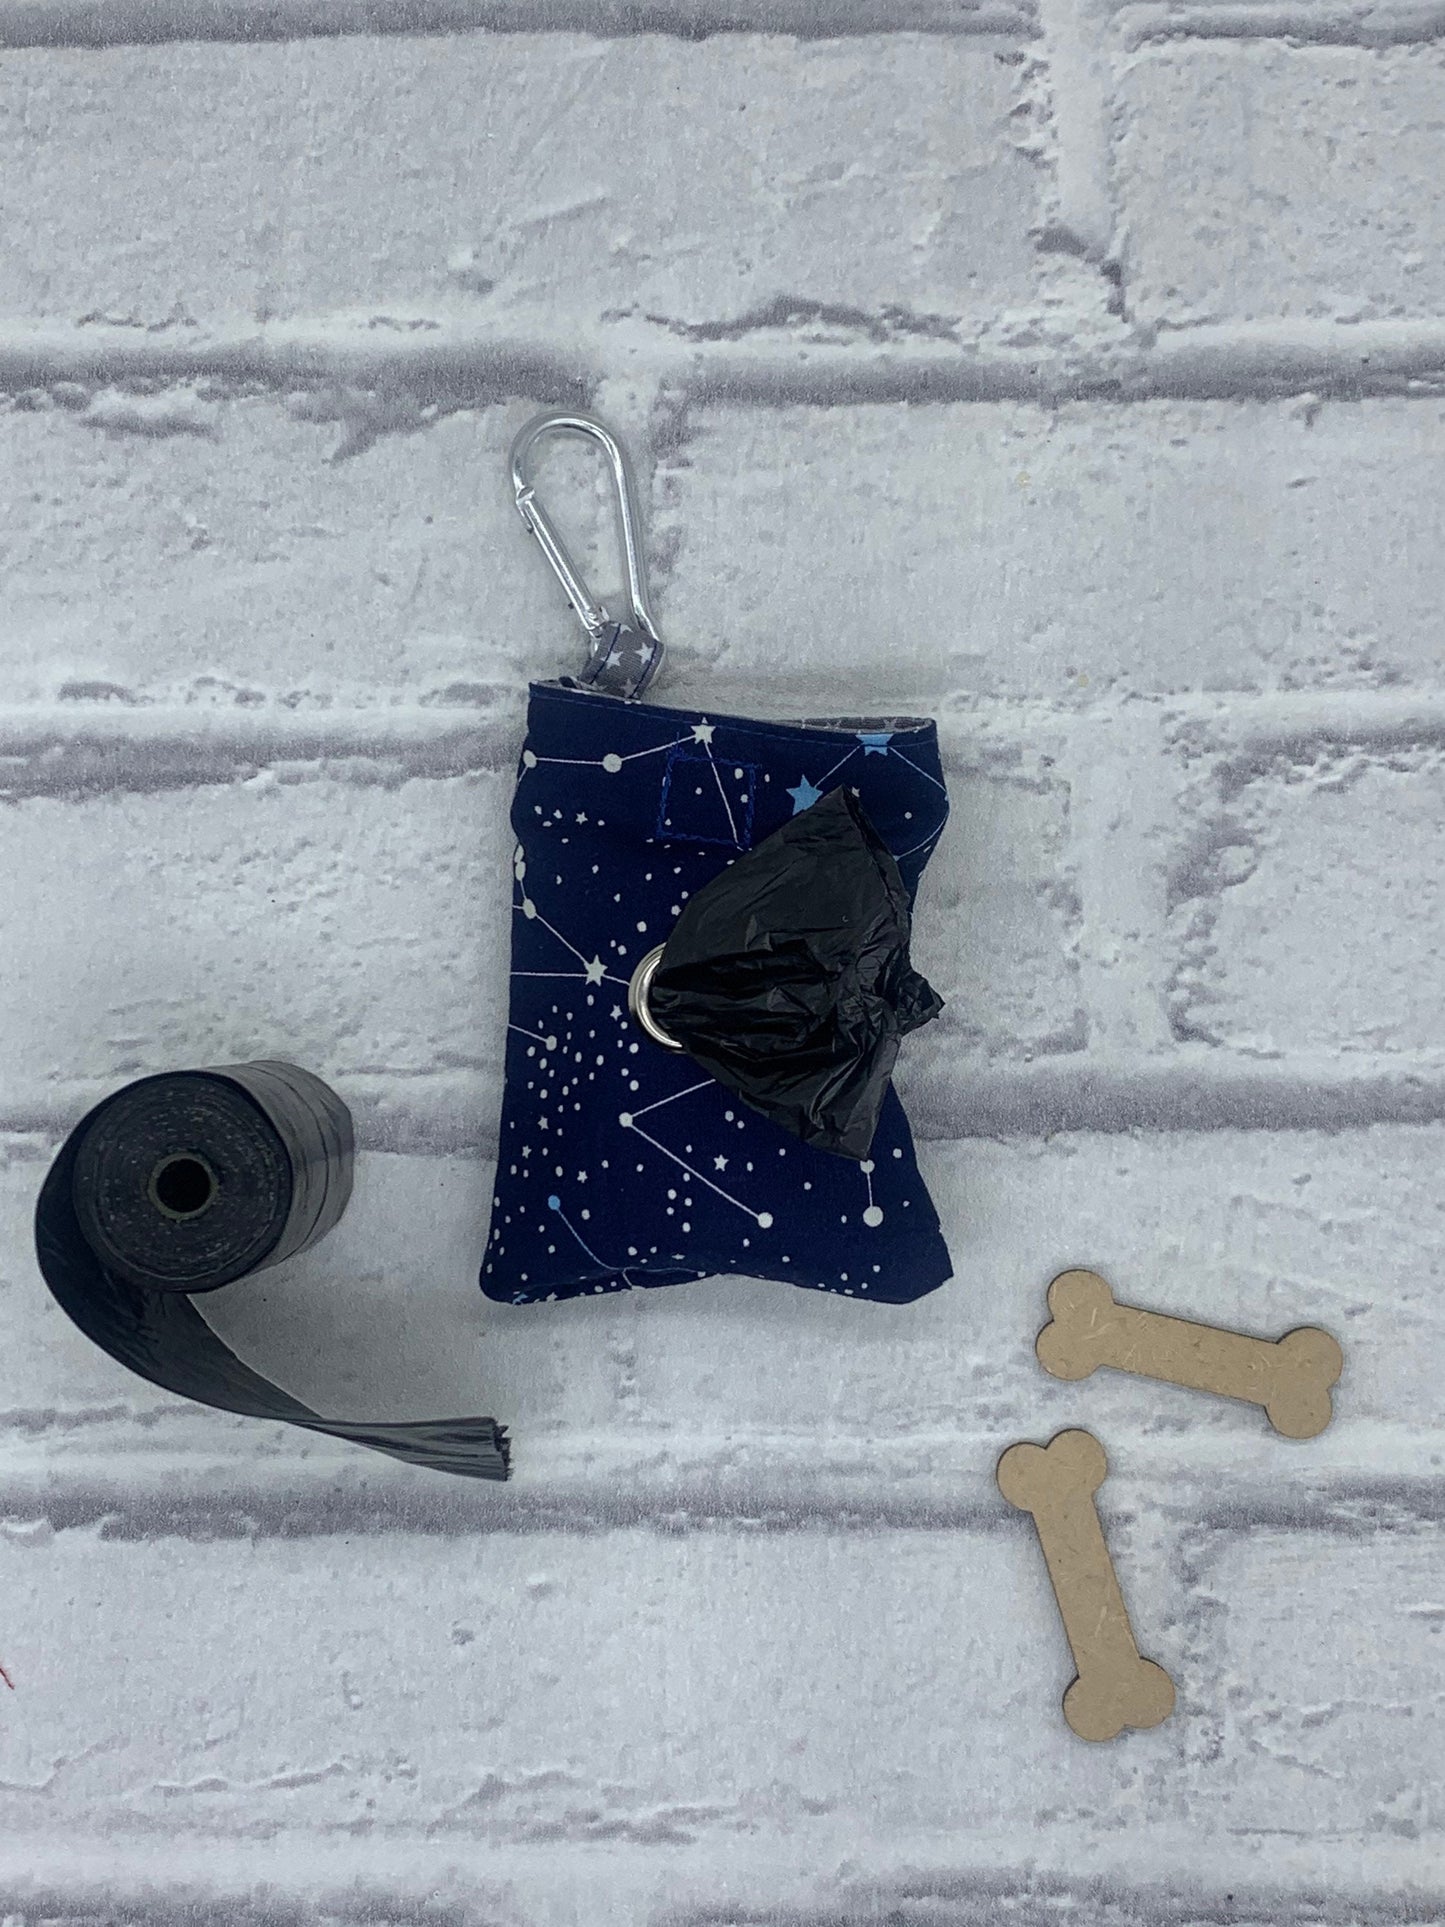 Constellation dog poo bag dispenser/ treat pouch